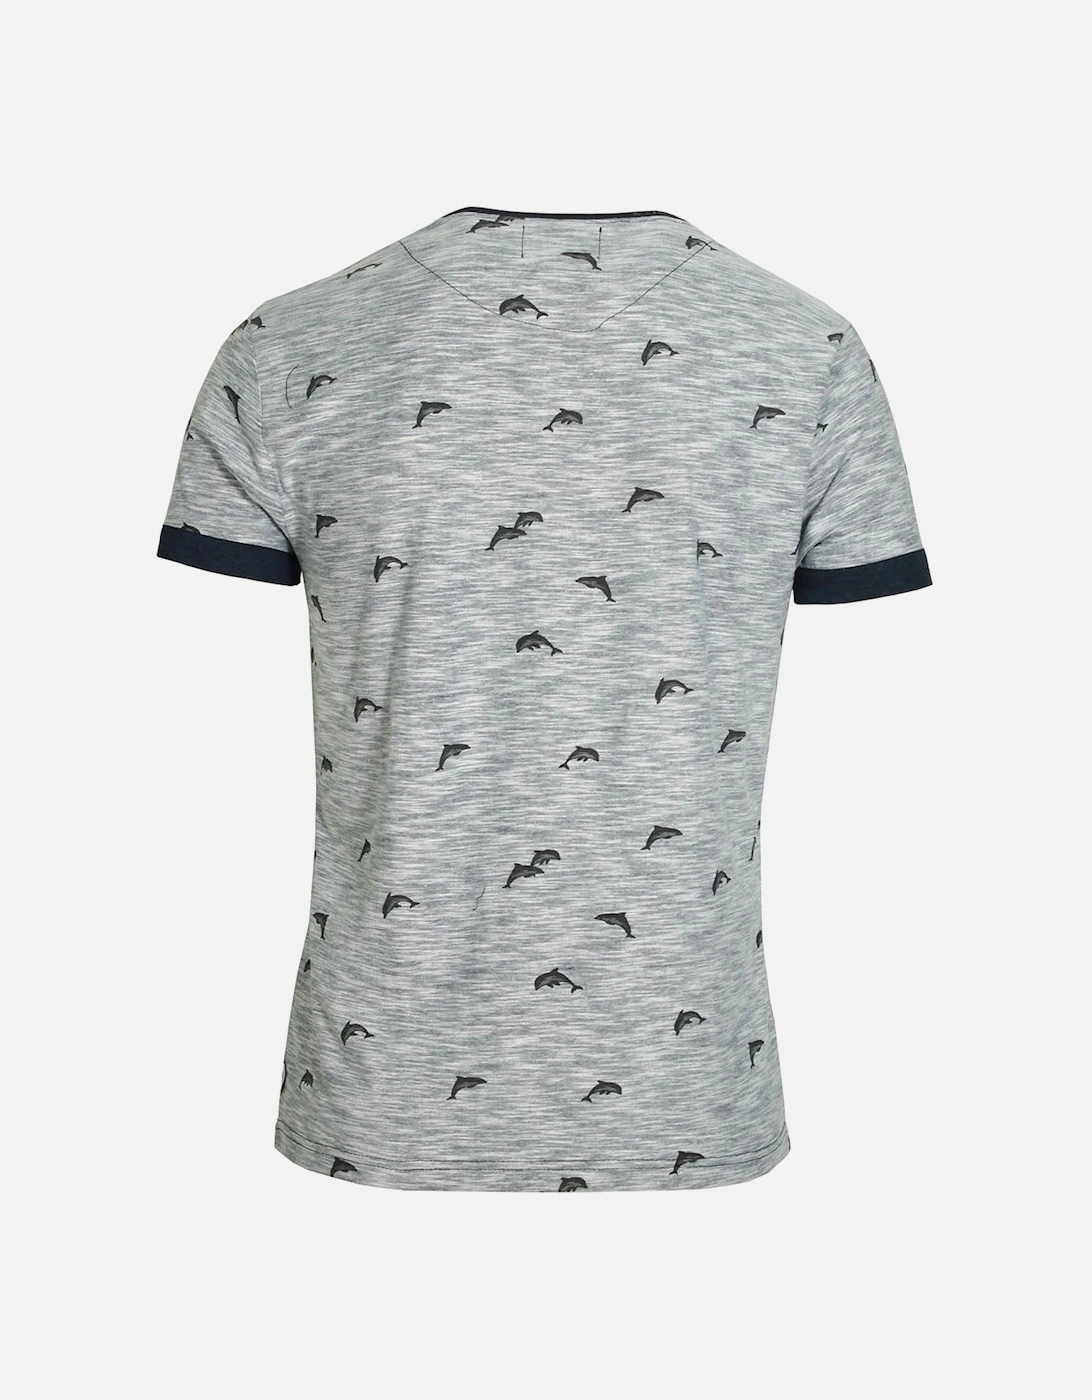 Stonewell Dolphin Print Pocket T-Shirt | Navy